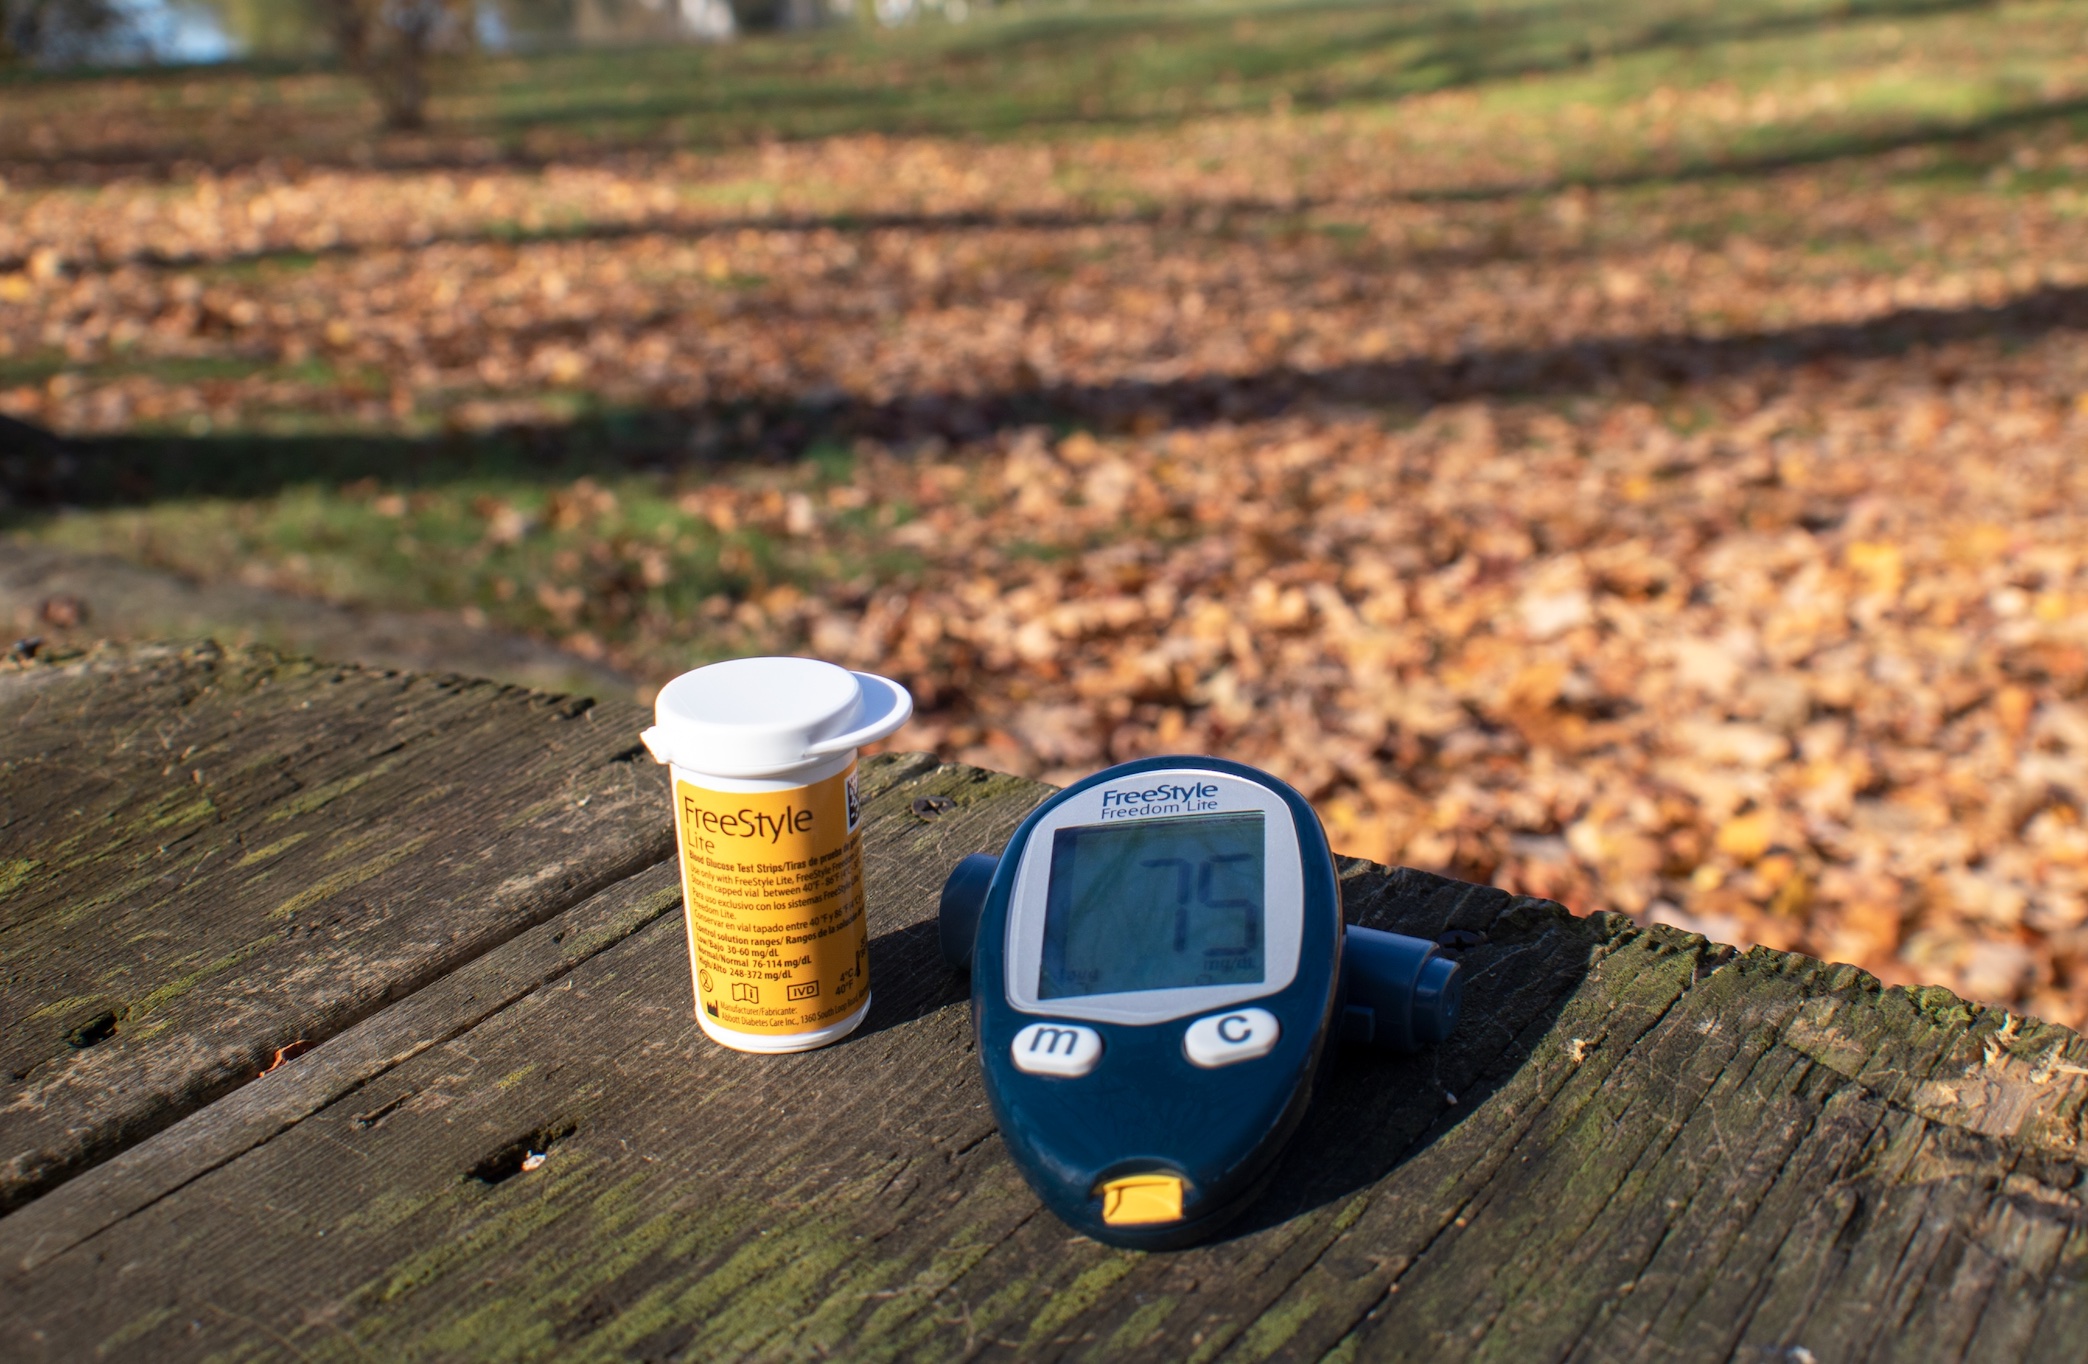 Glucose meter and test strips; image by David Moruzzi, via Unsplash.com.